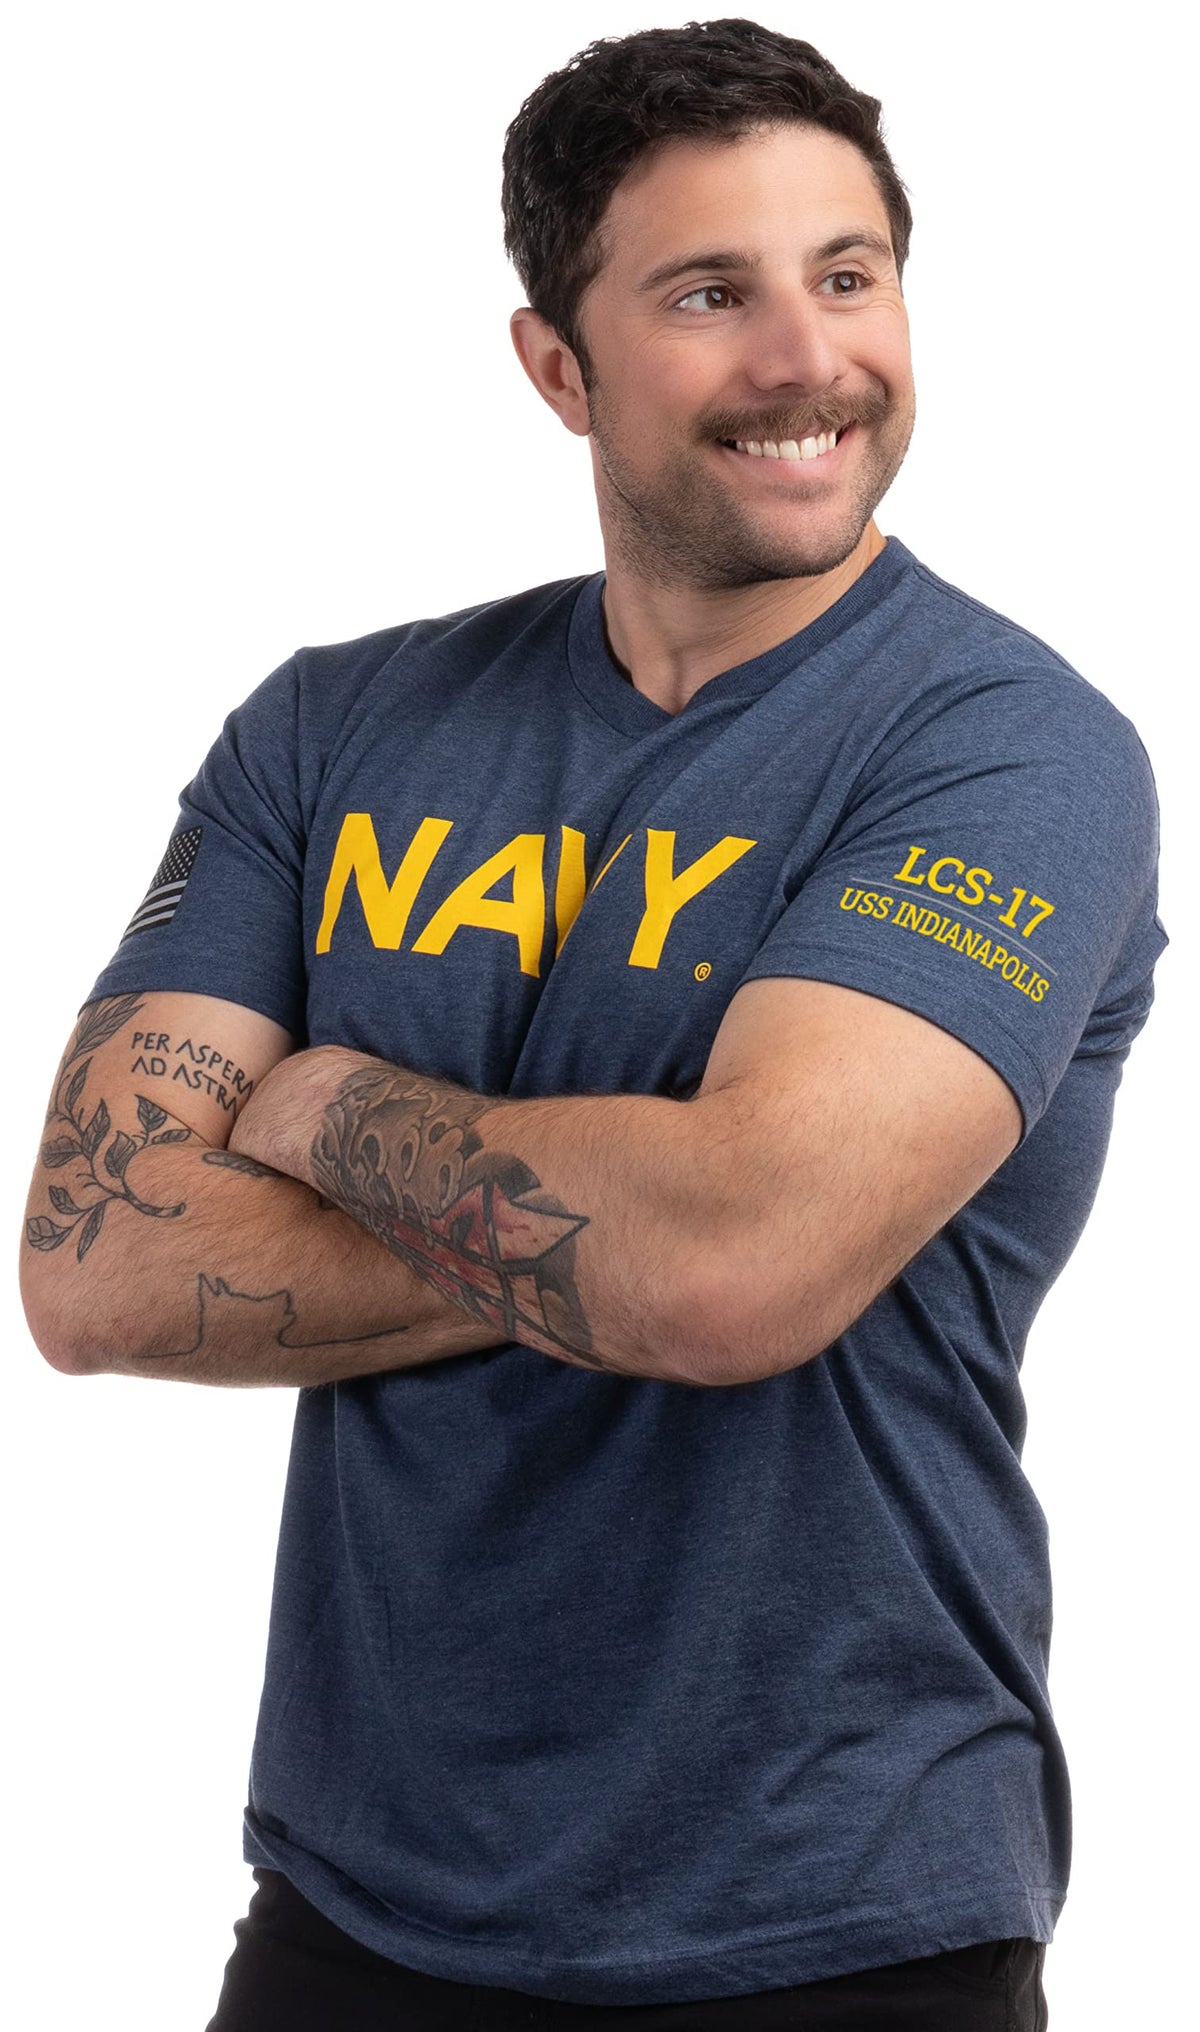 USS Indianapolis, LCS-17 | U.S. Navy Sailor Veteran USN United States Naval T-shirt for Men Women